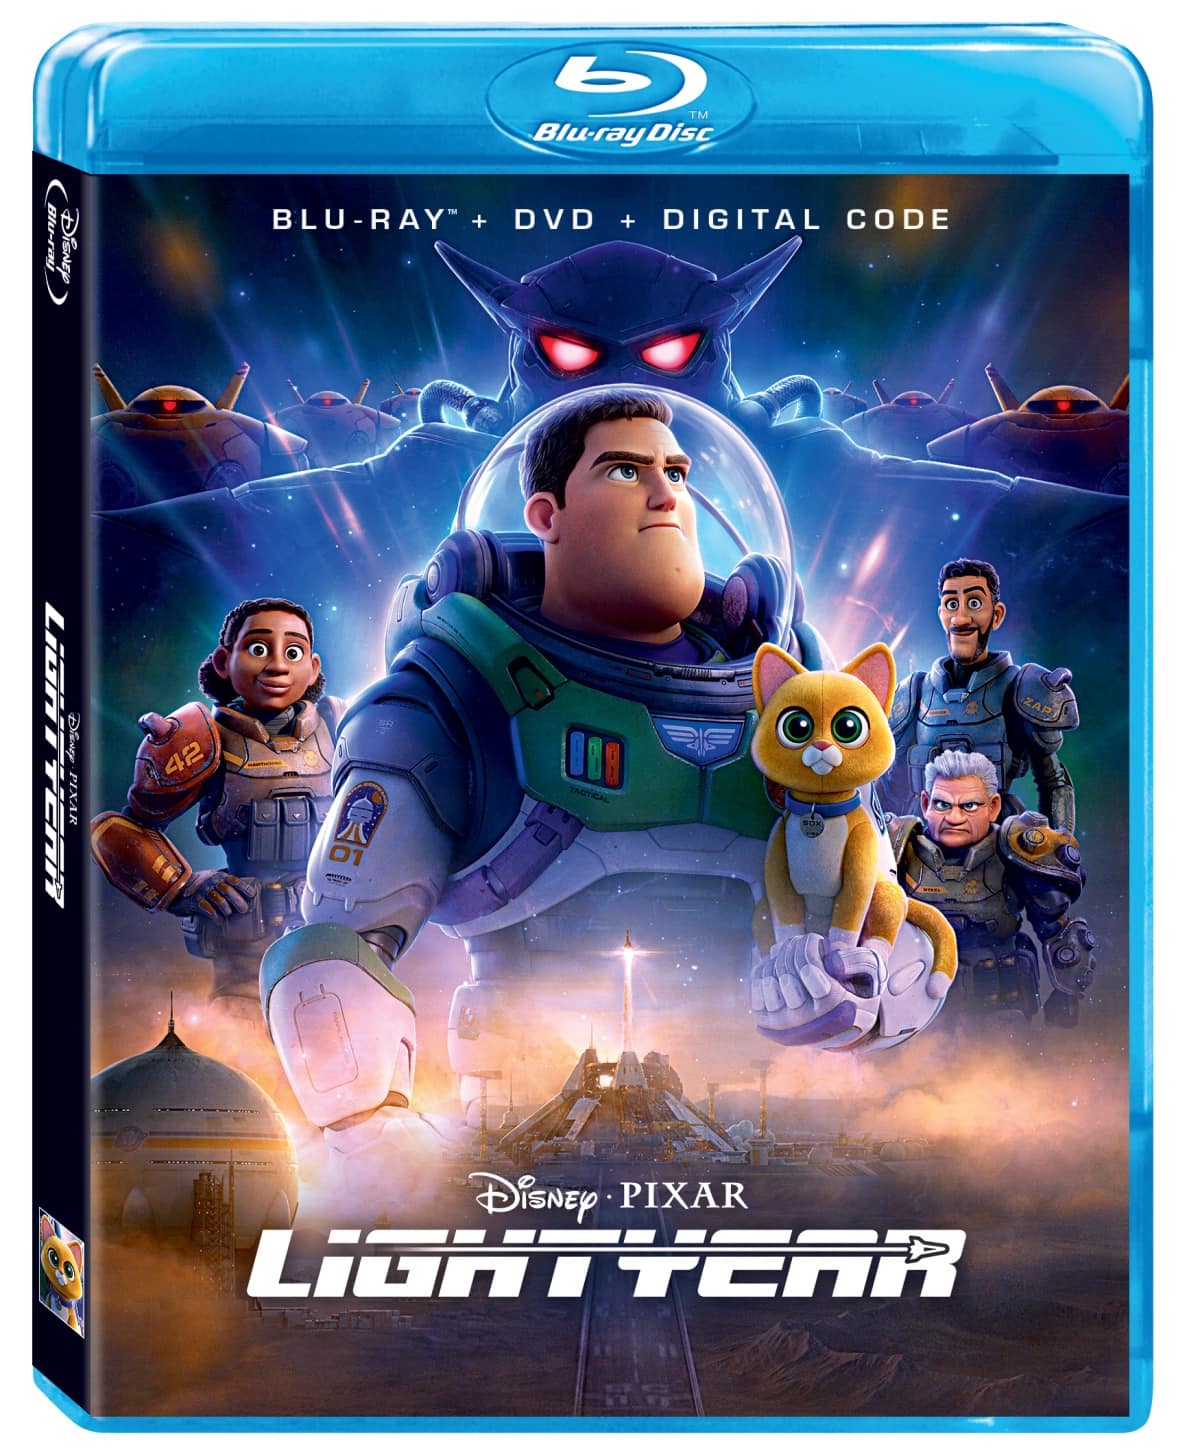 Lightyear Bonus Features Blu-ray 4k